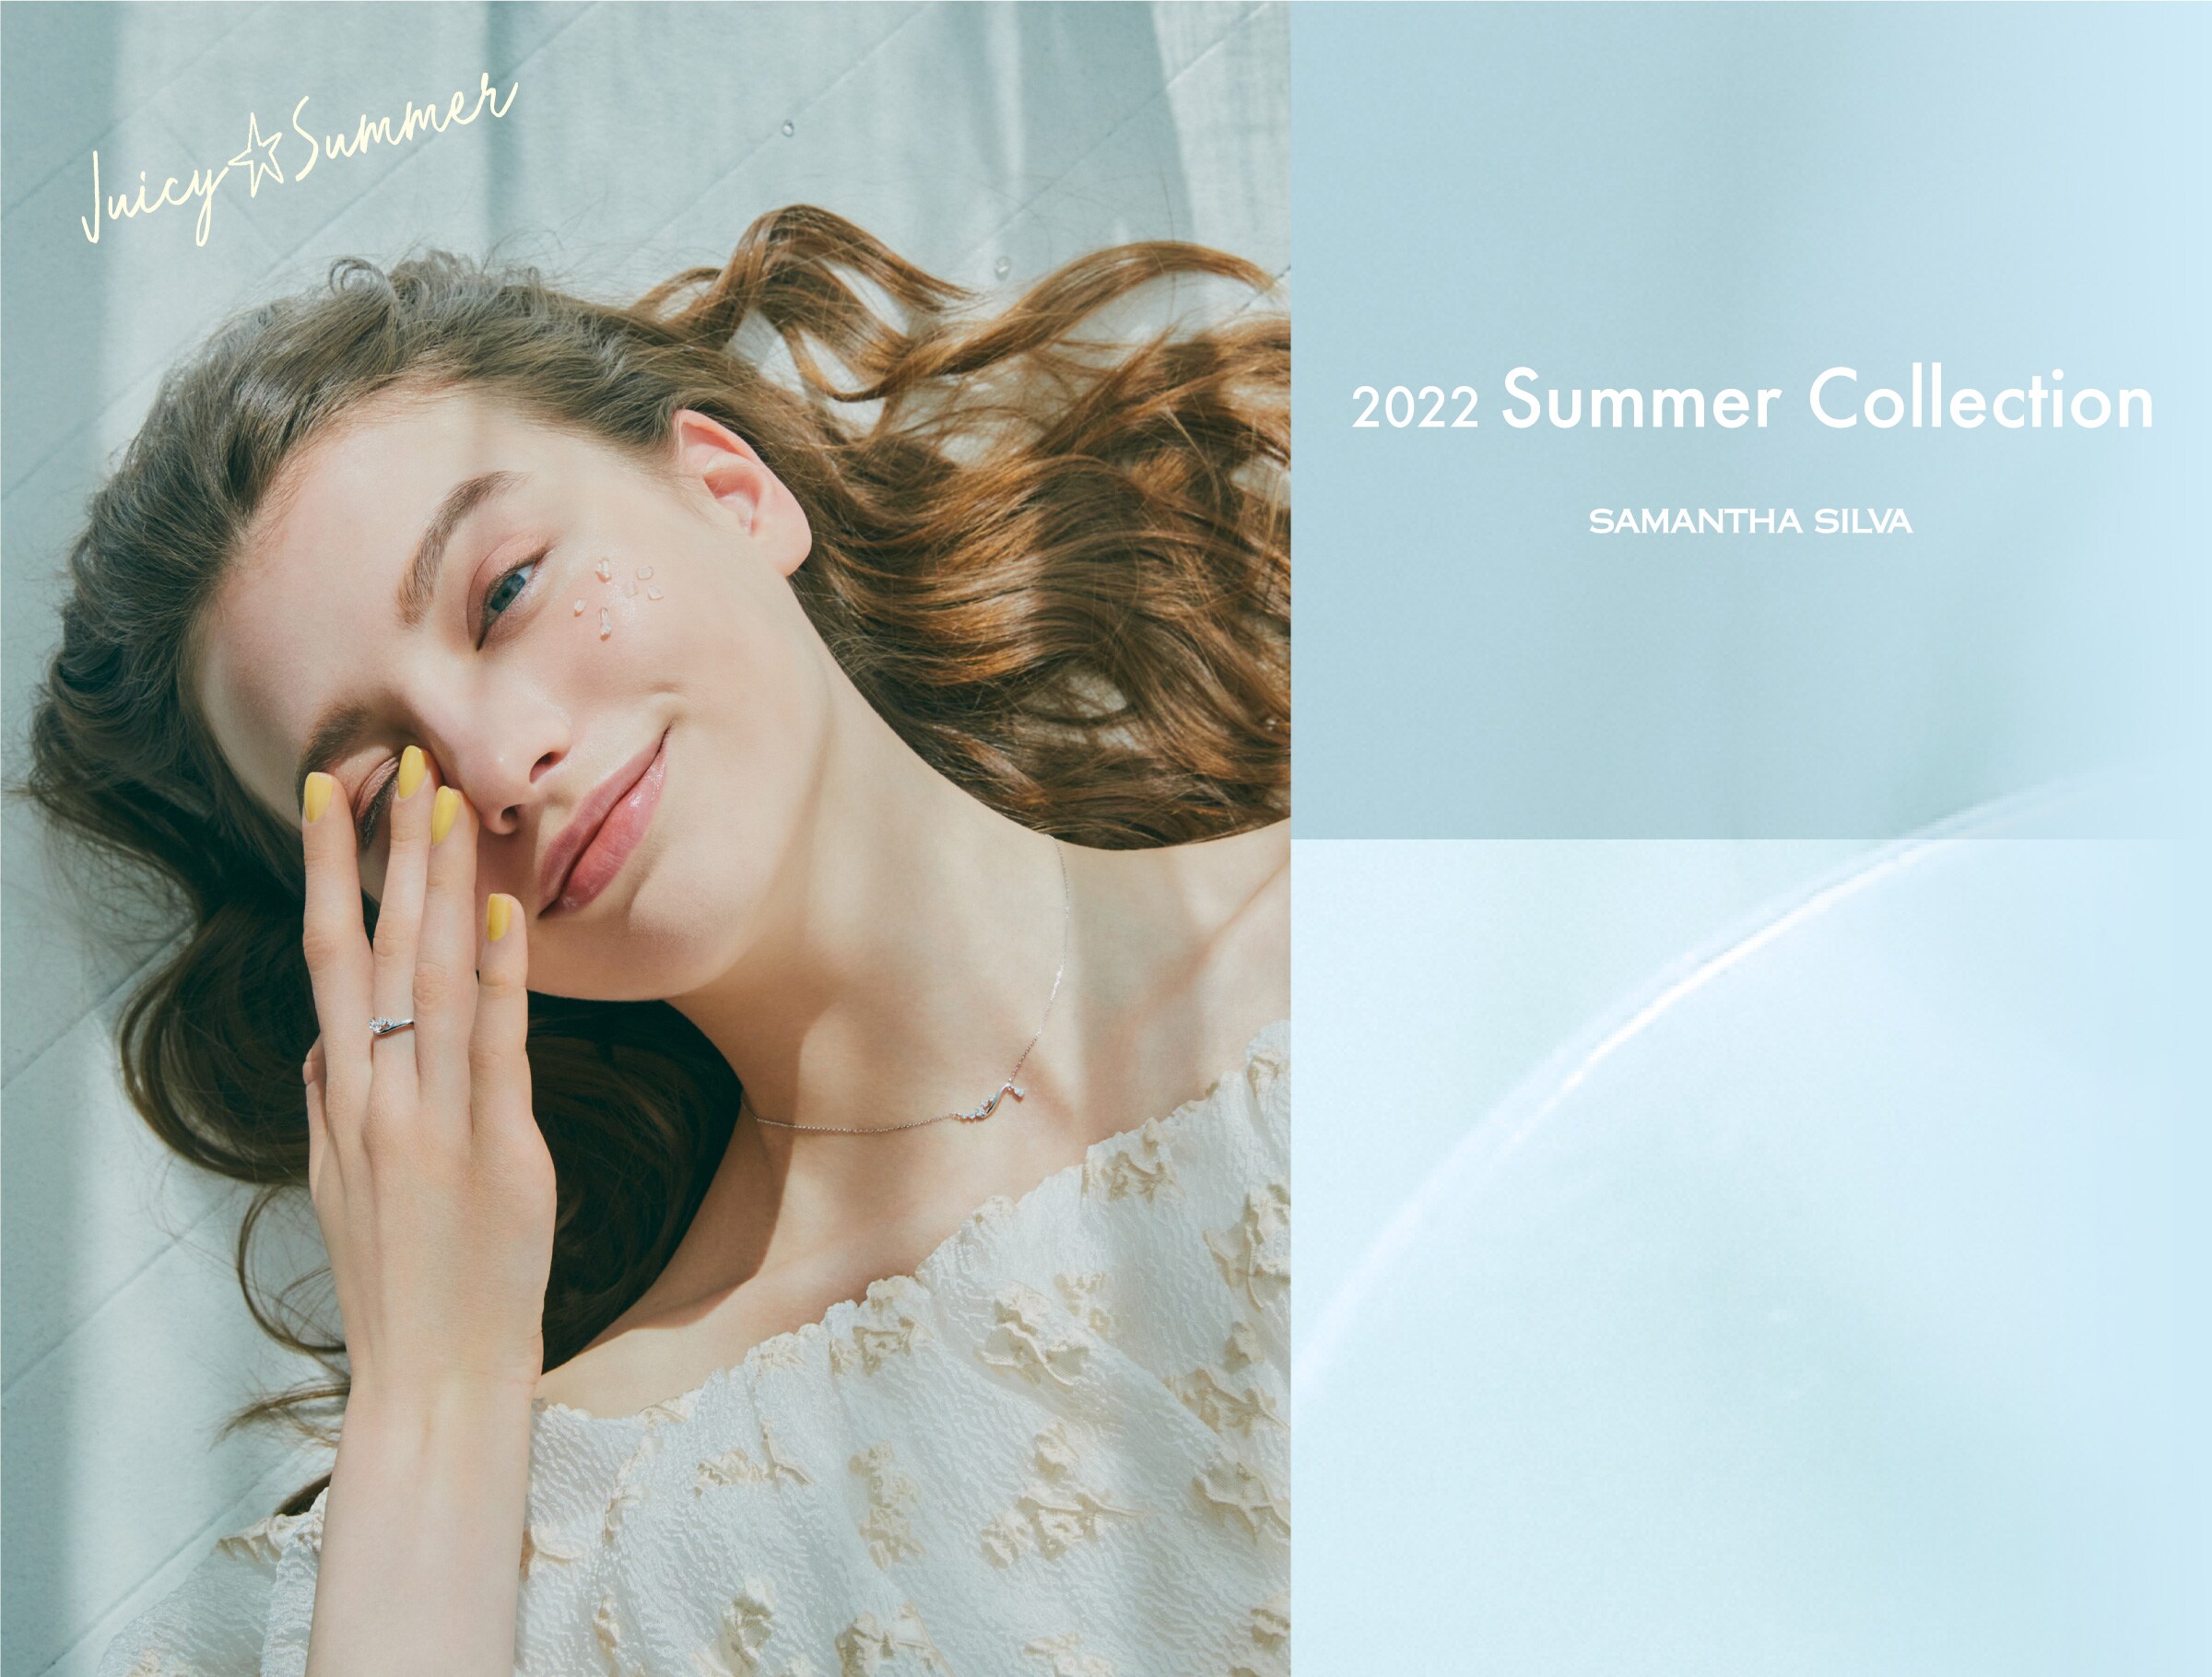 SAMANTHA SILVA 2022 Summer Collection